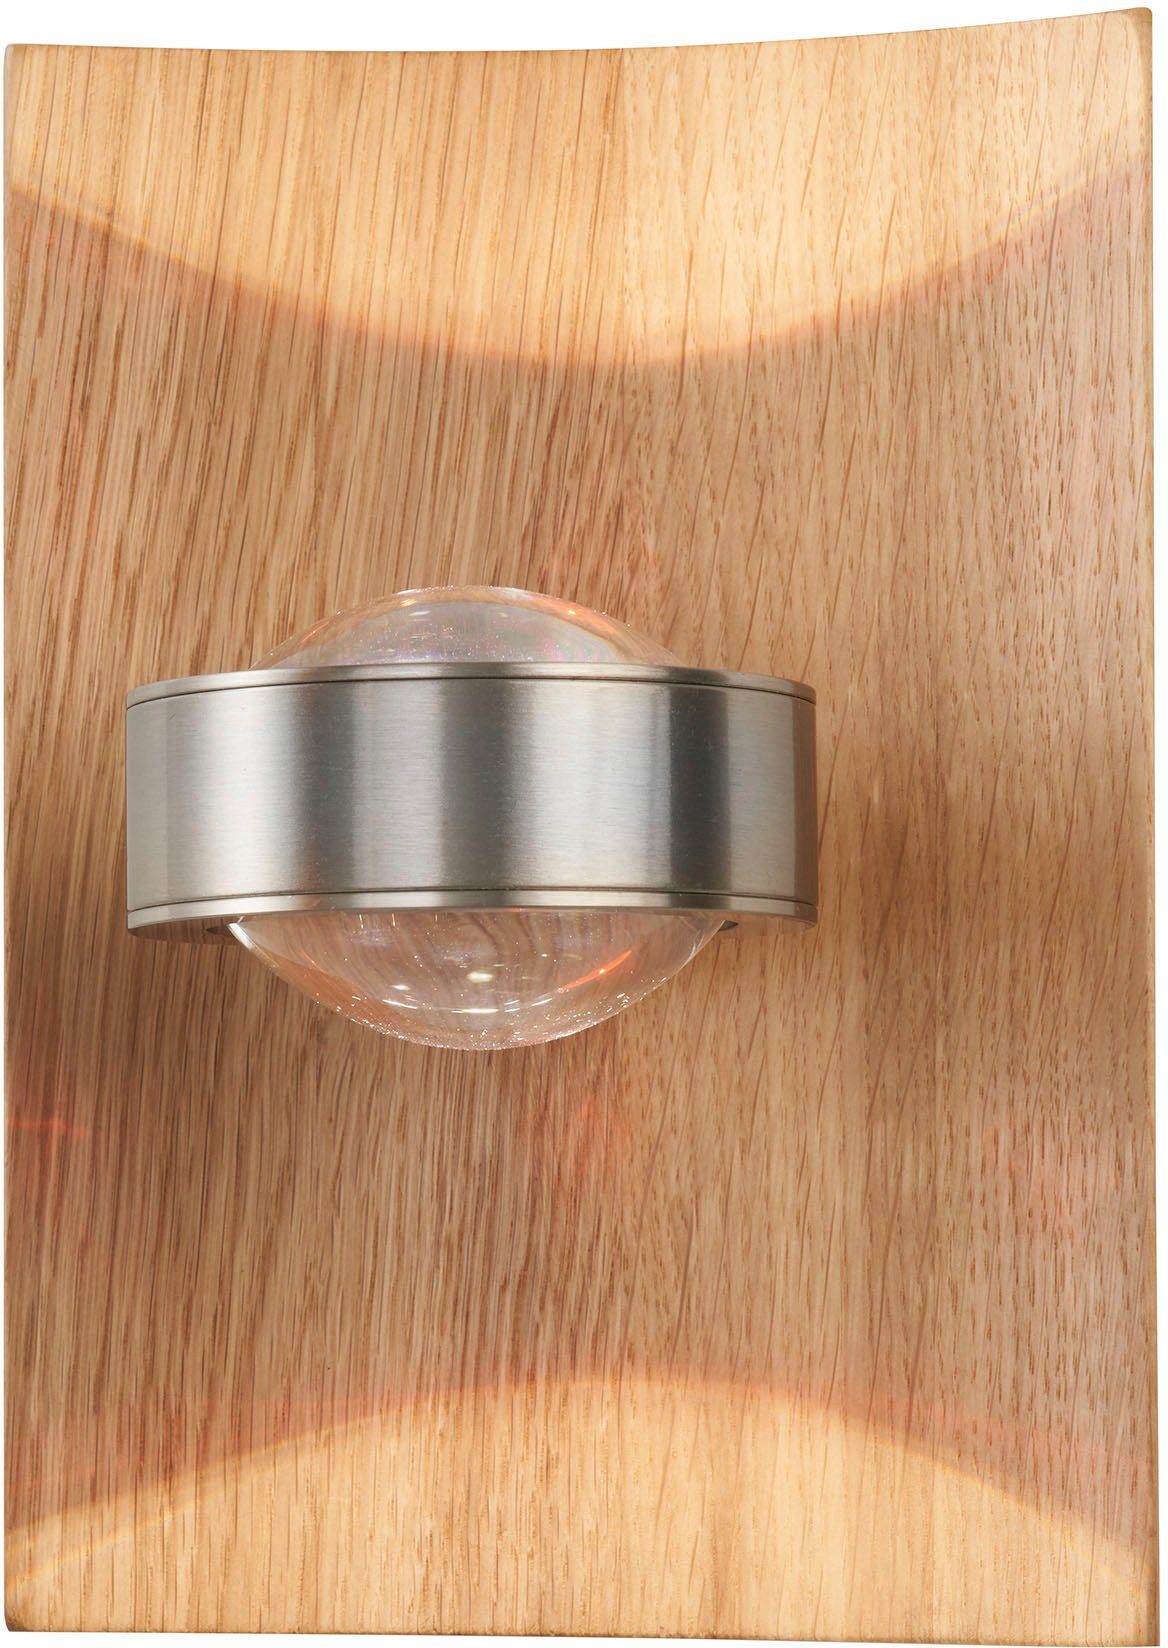 FISCHER & LED integriert, Wandleuchte langlebige Shine-Wood, HONSEL LED fest